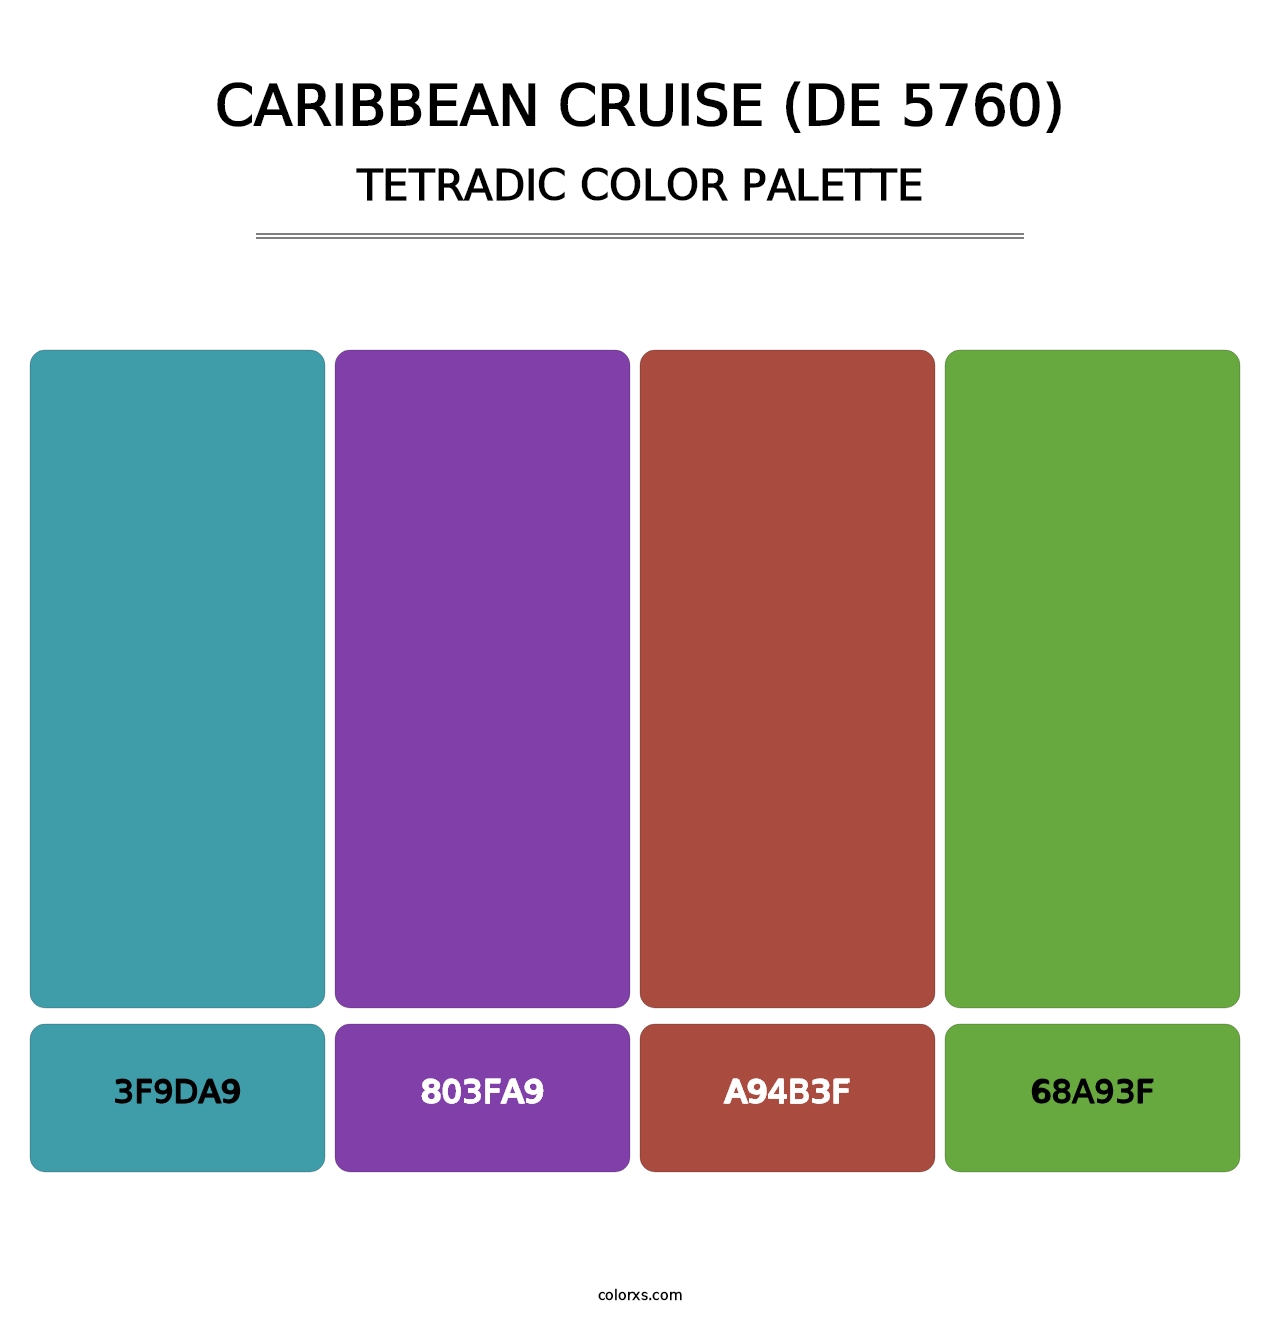 Caribbean Cruise (DE 5760) - Tetradic Color Palette